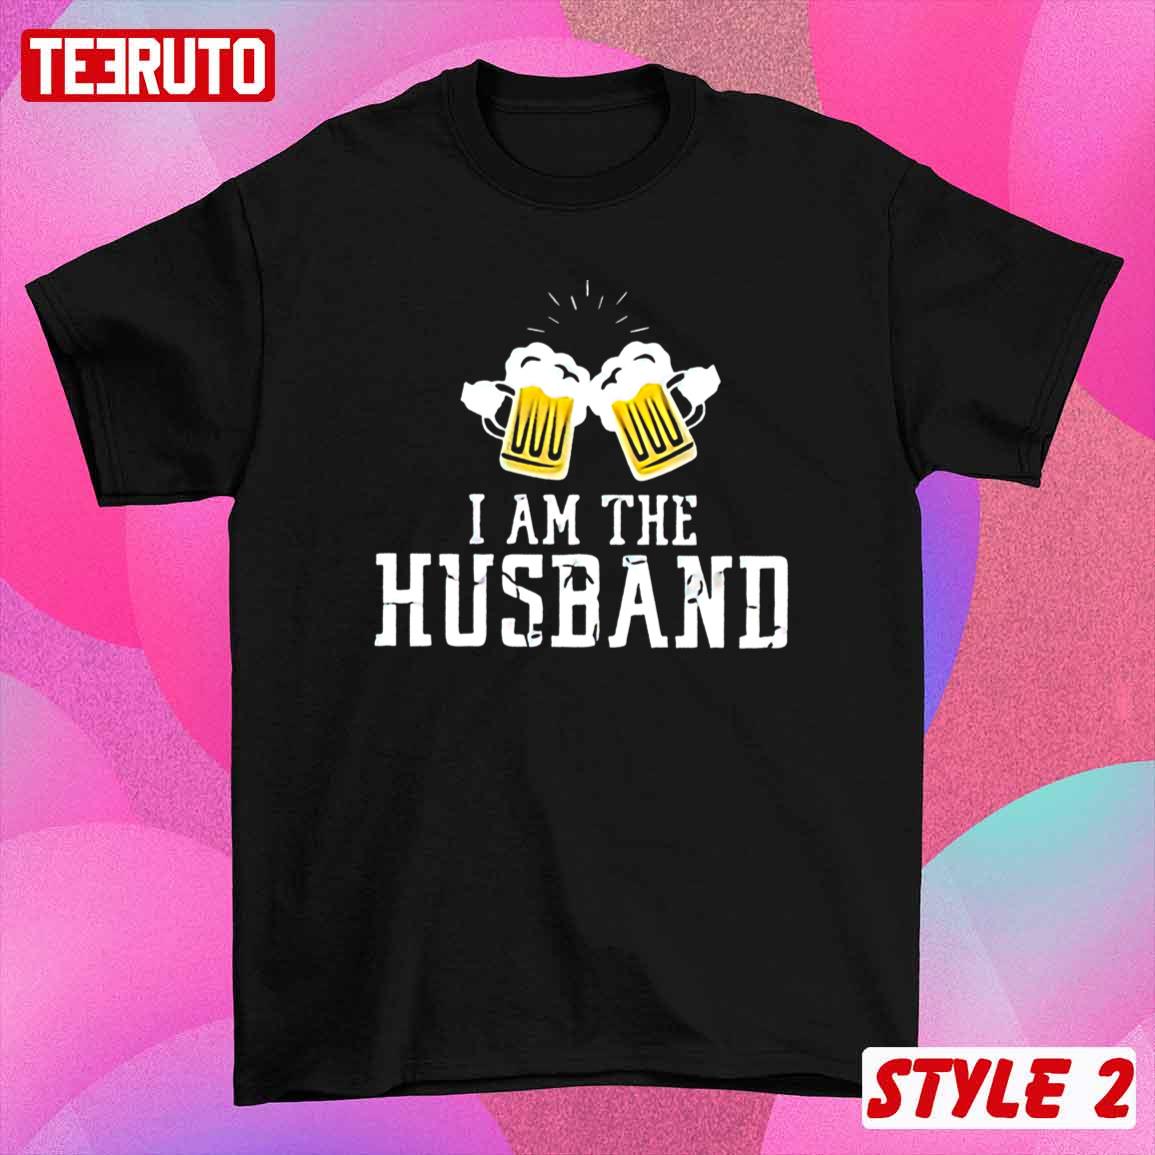 If I'm Too Drunk Take Me To The Husband Drinking Husband Wife Couple Matching Valentine Sweatshirt